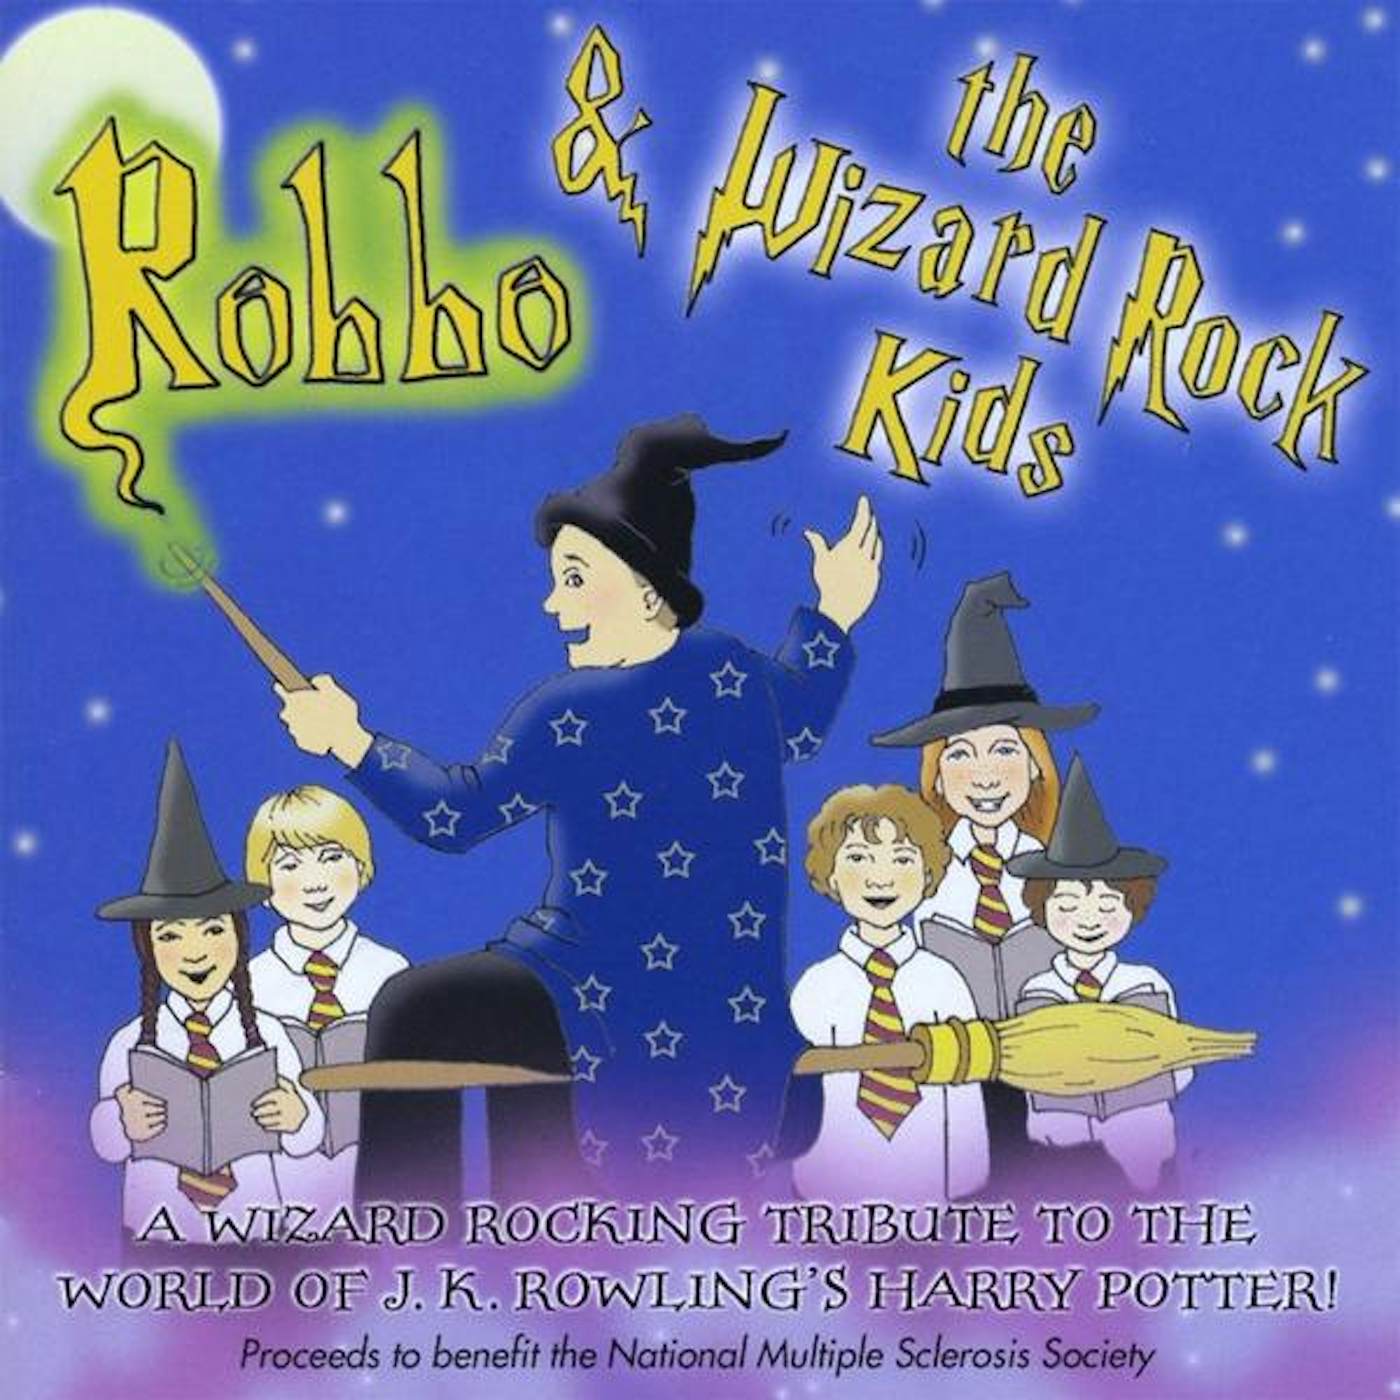 ROBBO & THE WIZARD ROCK KIDS CD